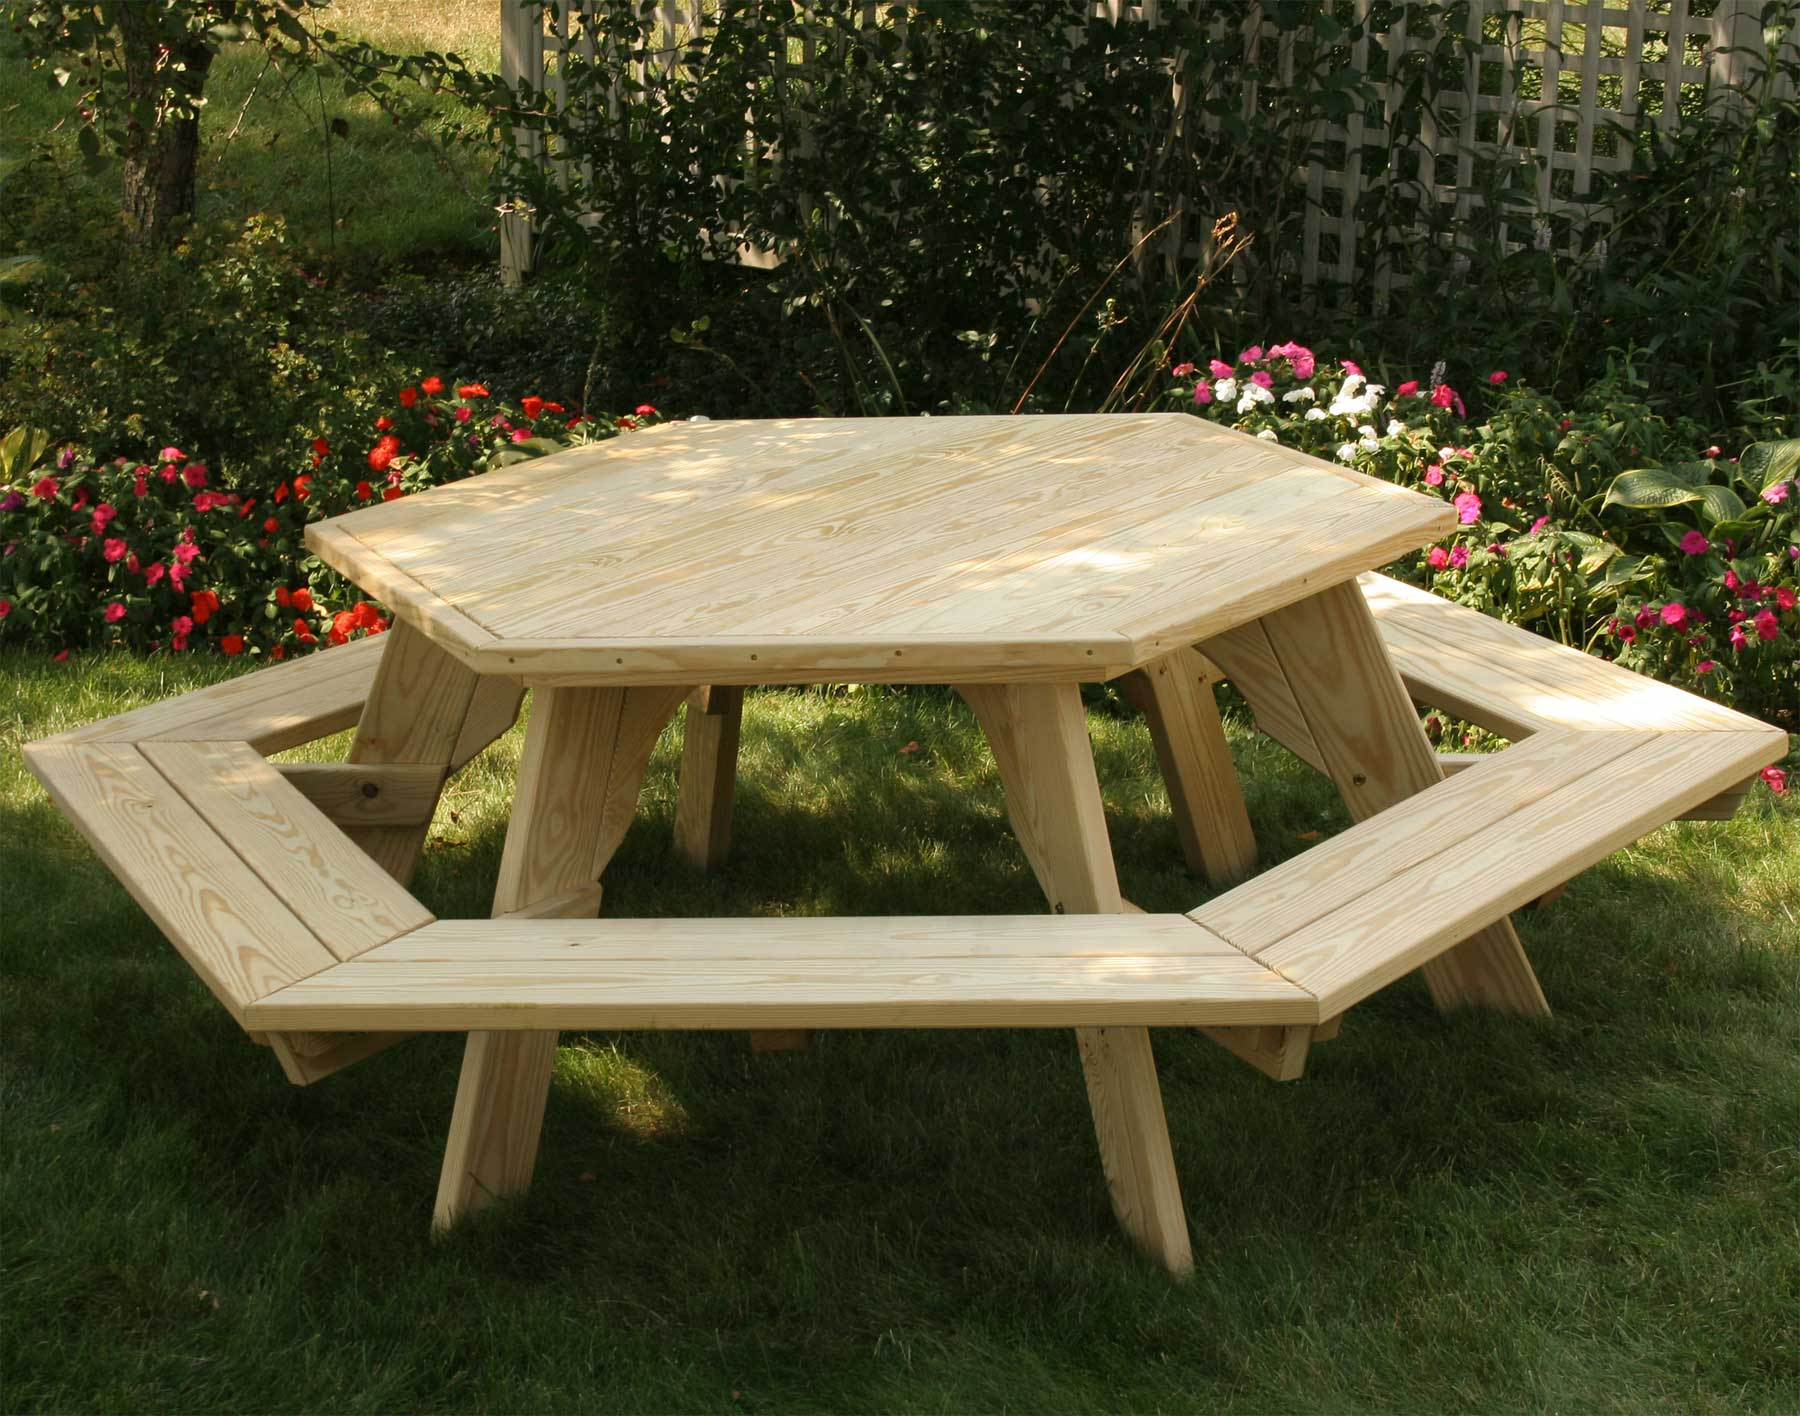 picnic-tables-treated-pine-hexagon-picnic-table-xvbyjxq-.jpg